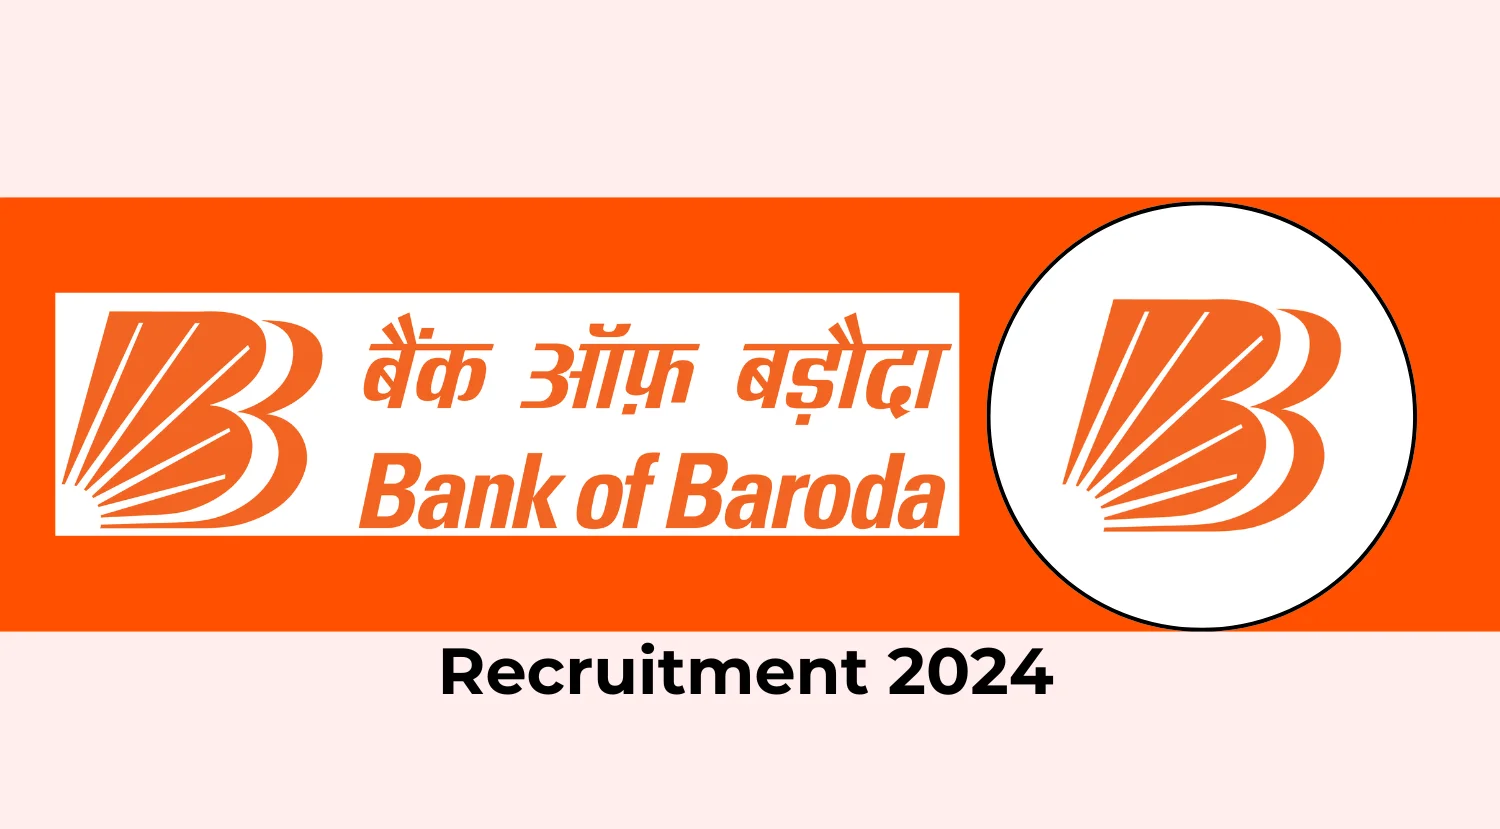 Bank of Baroda (BOB) Recruitment 2024 Notification